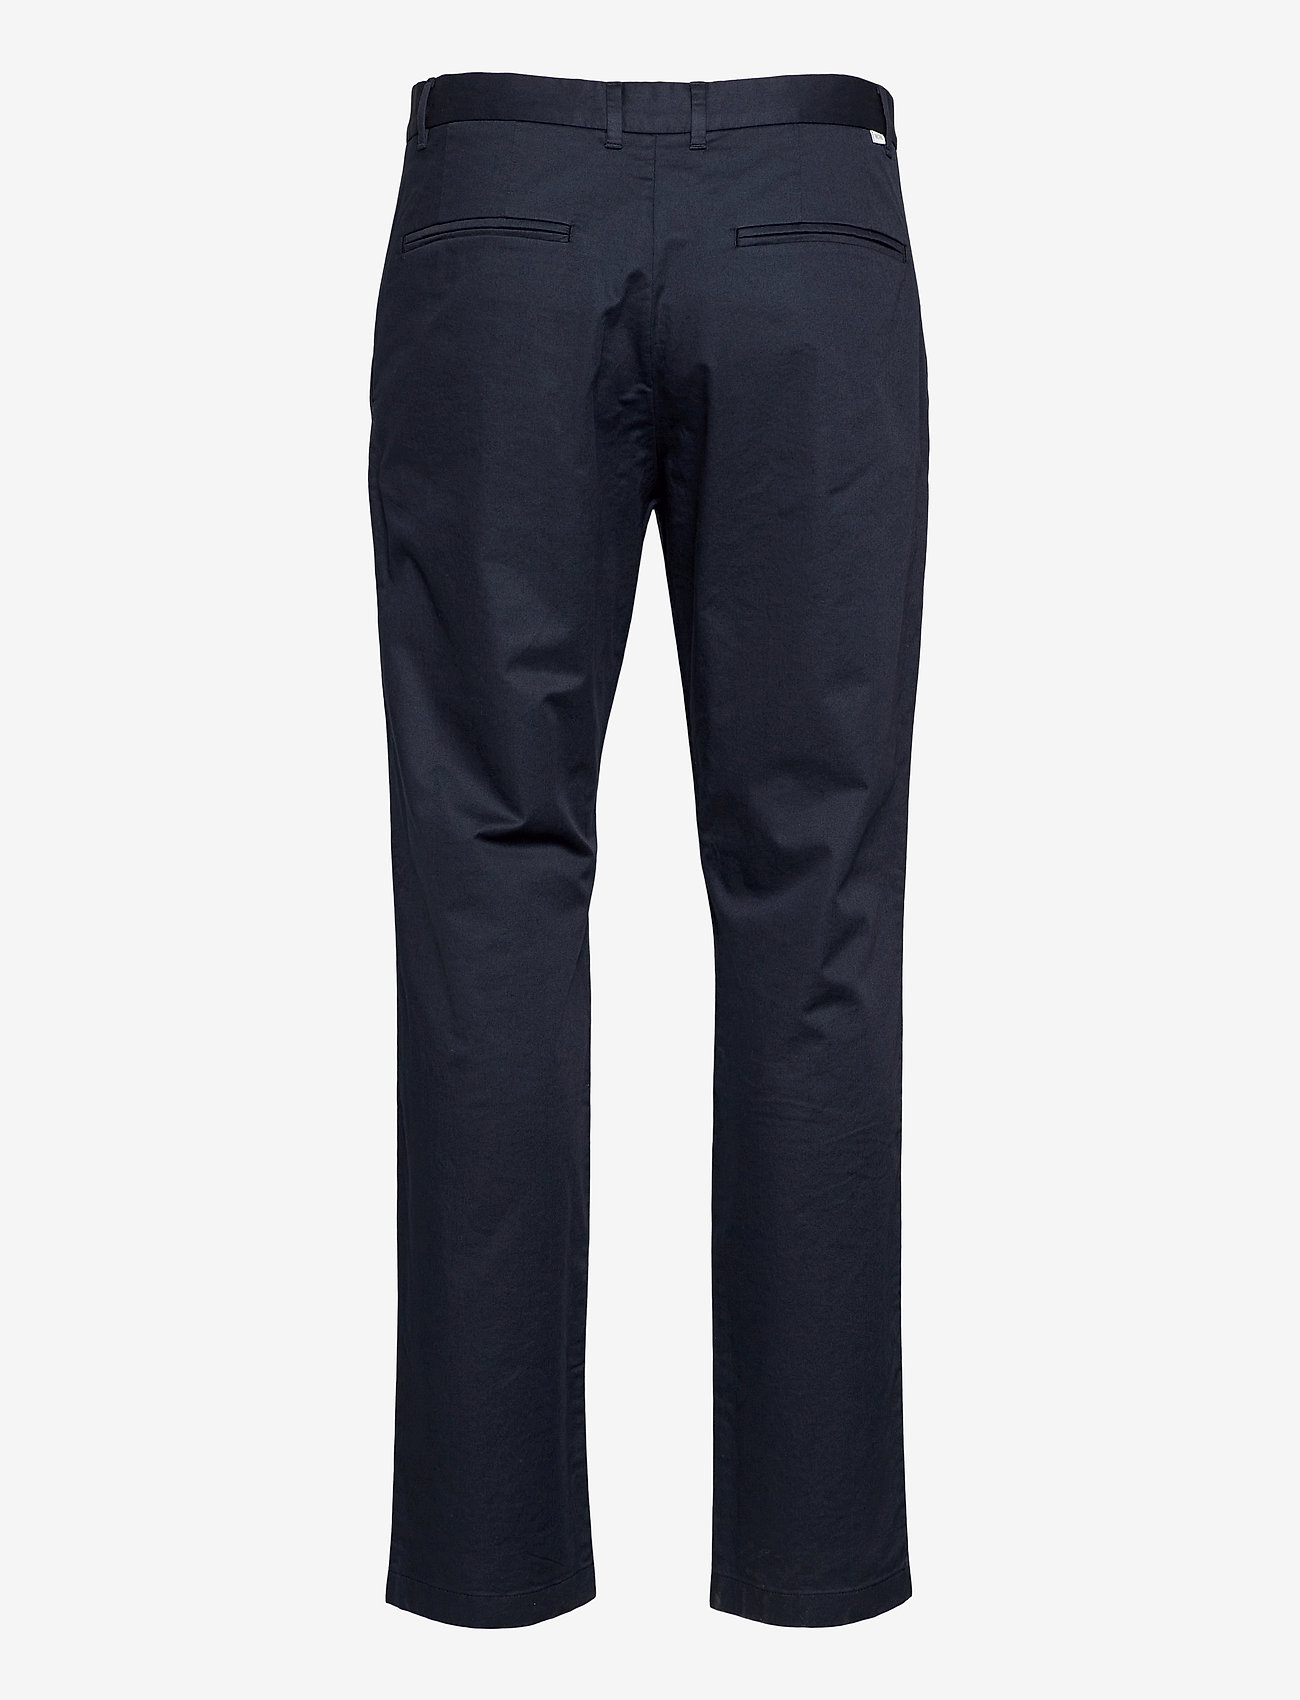 Wood Wood - Marcus light twill trousers - chemises basiques - navy - 1